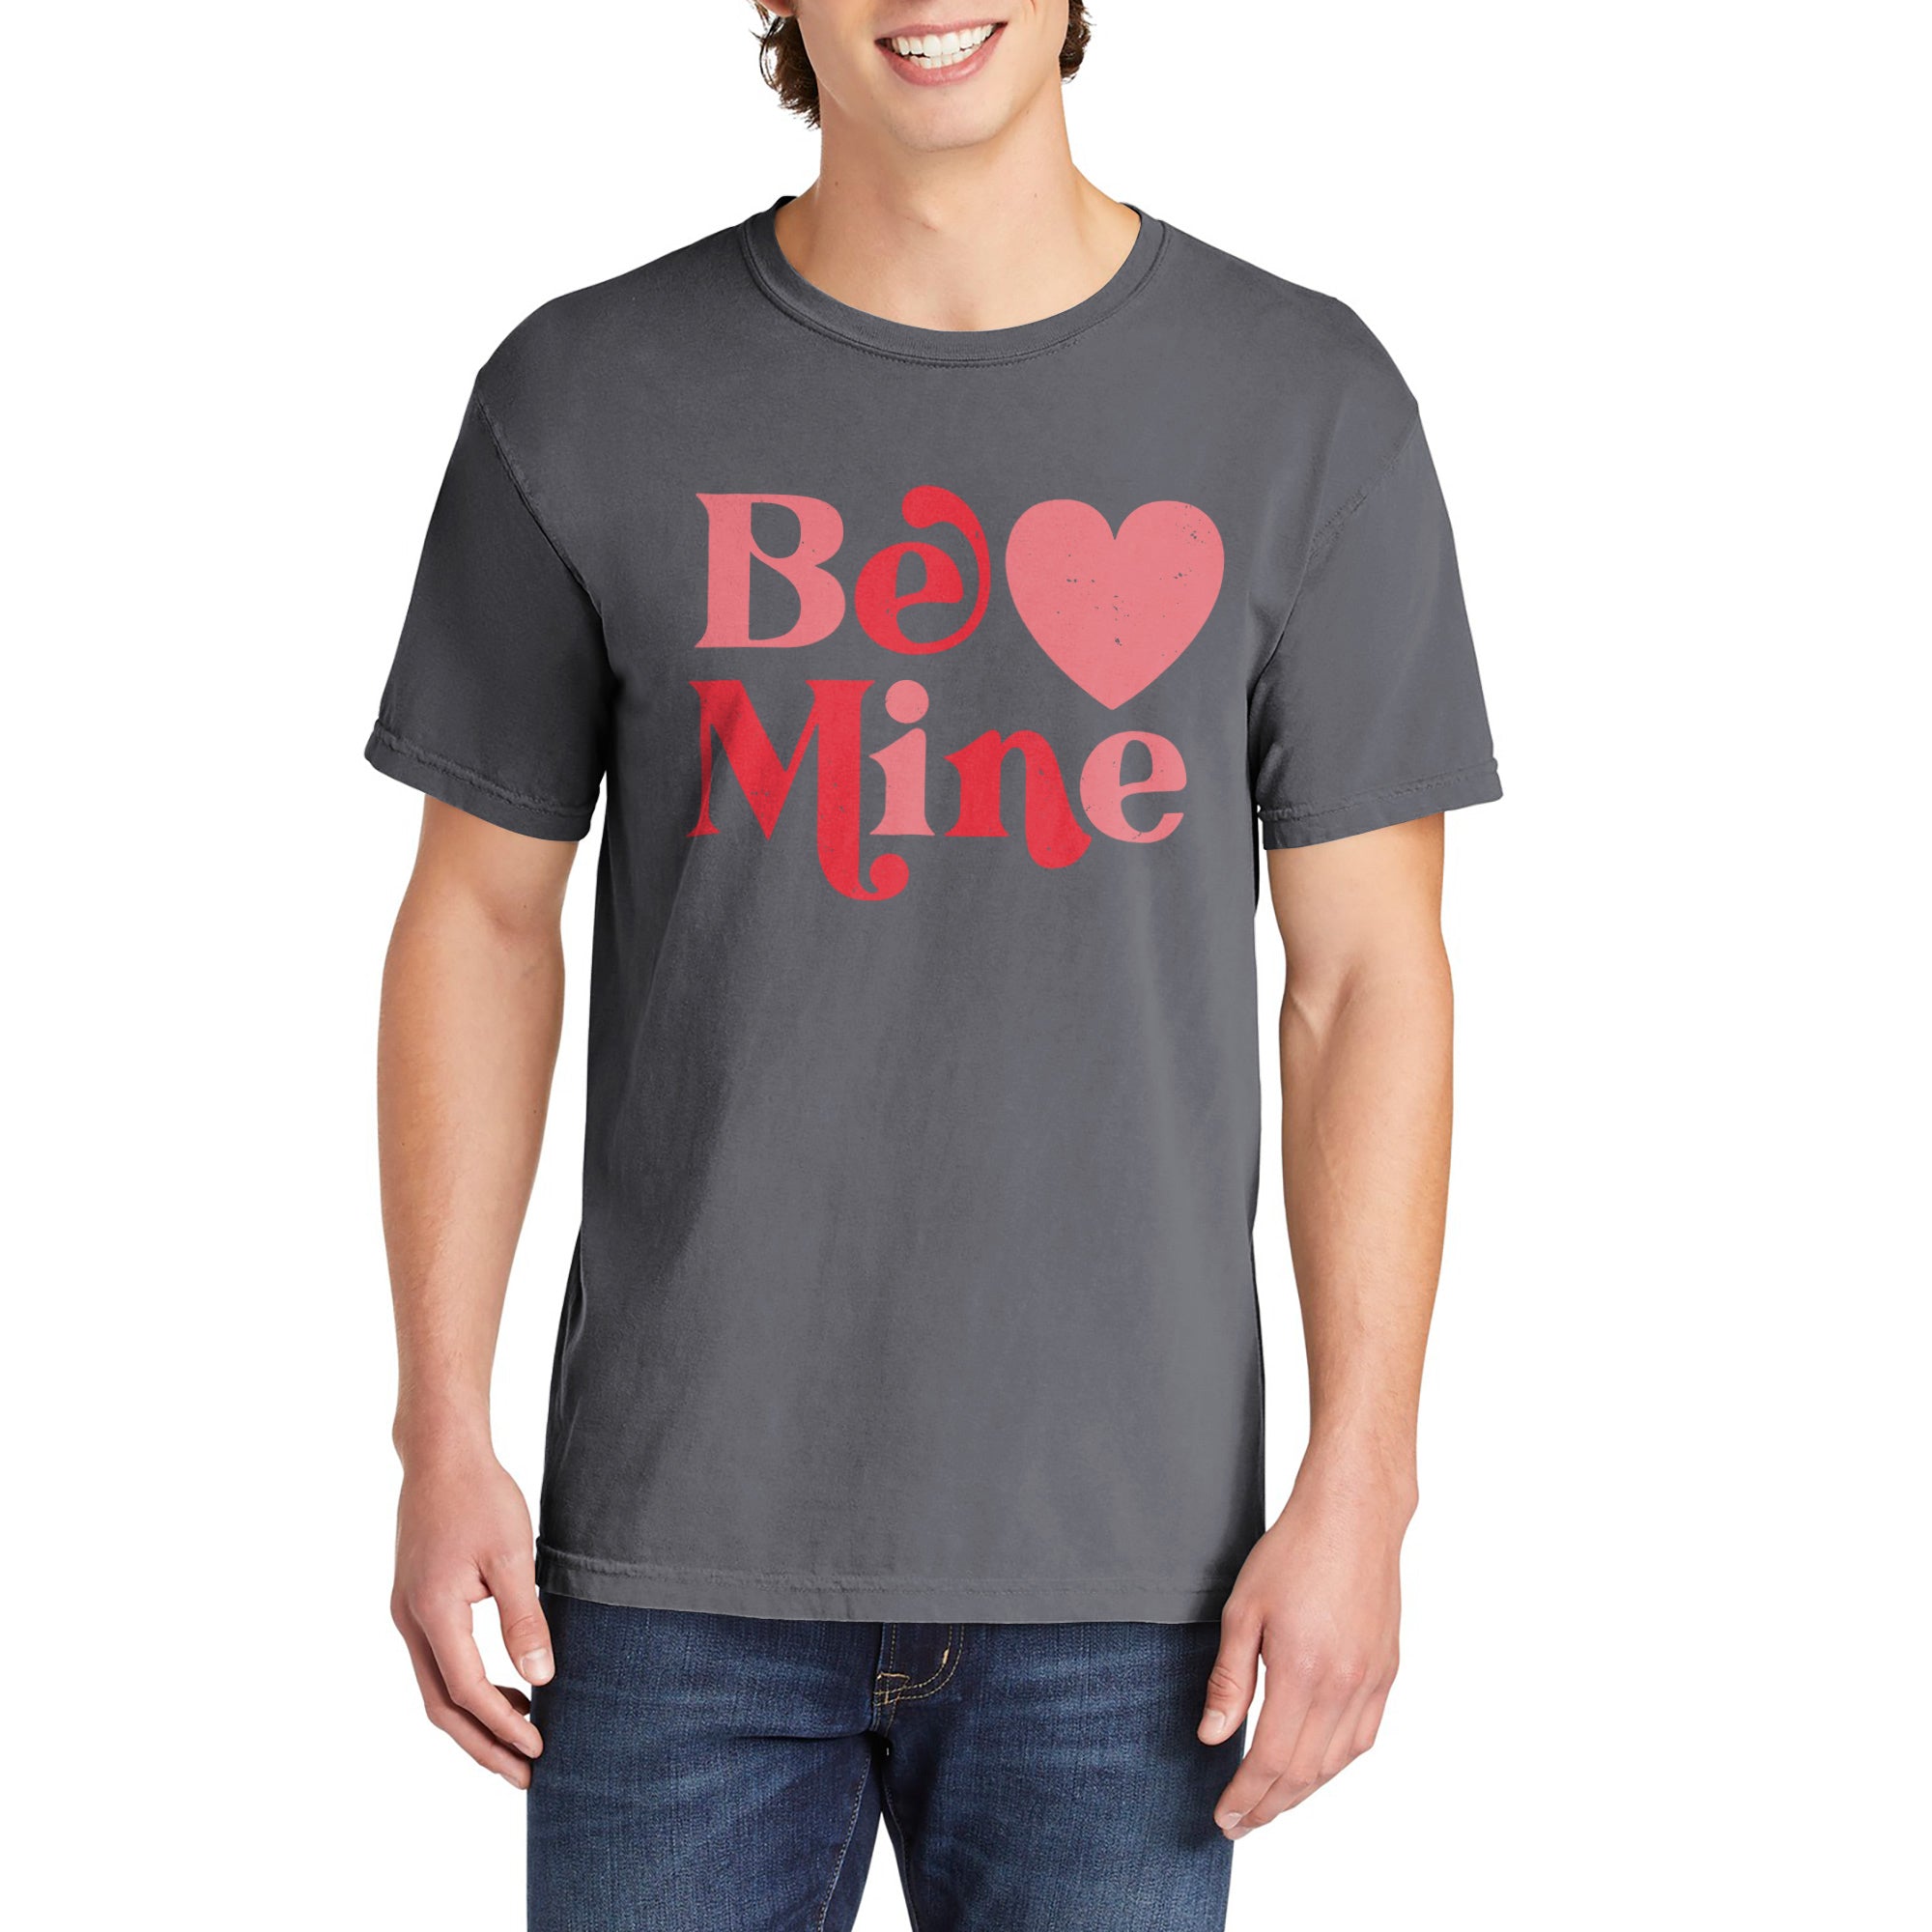 Be Mine Valentines Shirt Garment-Dyed Tee